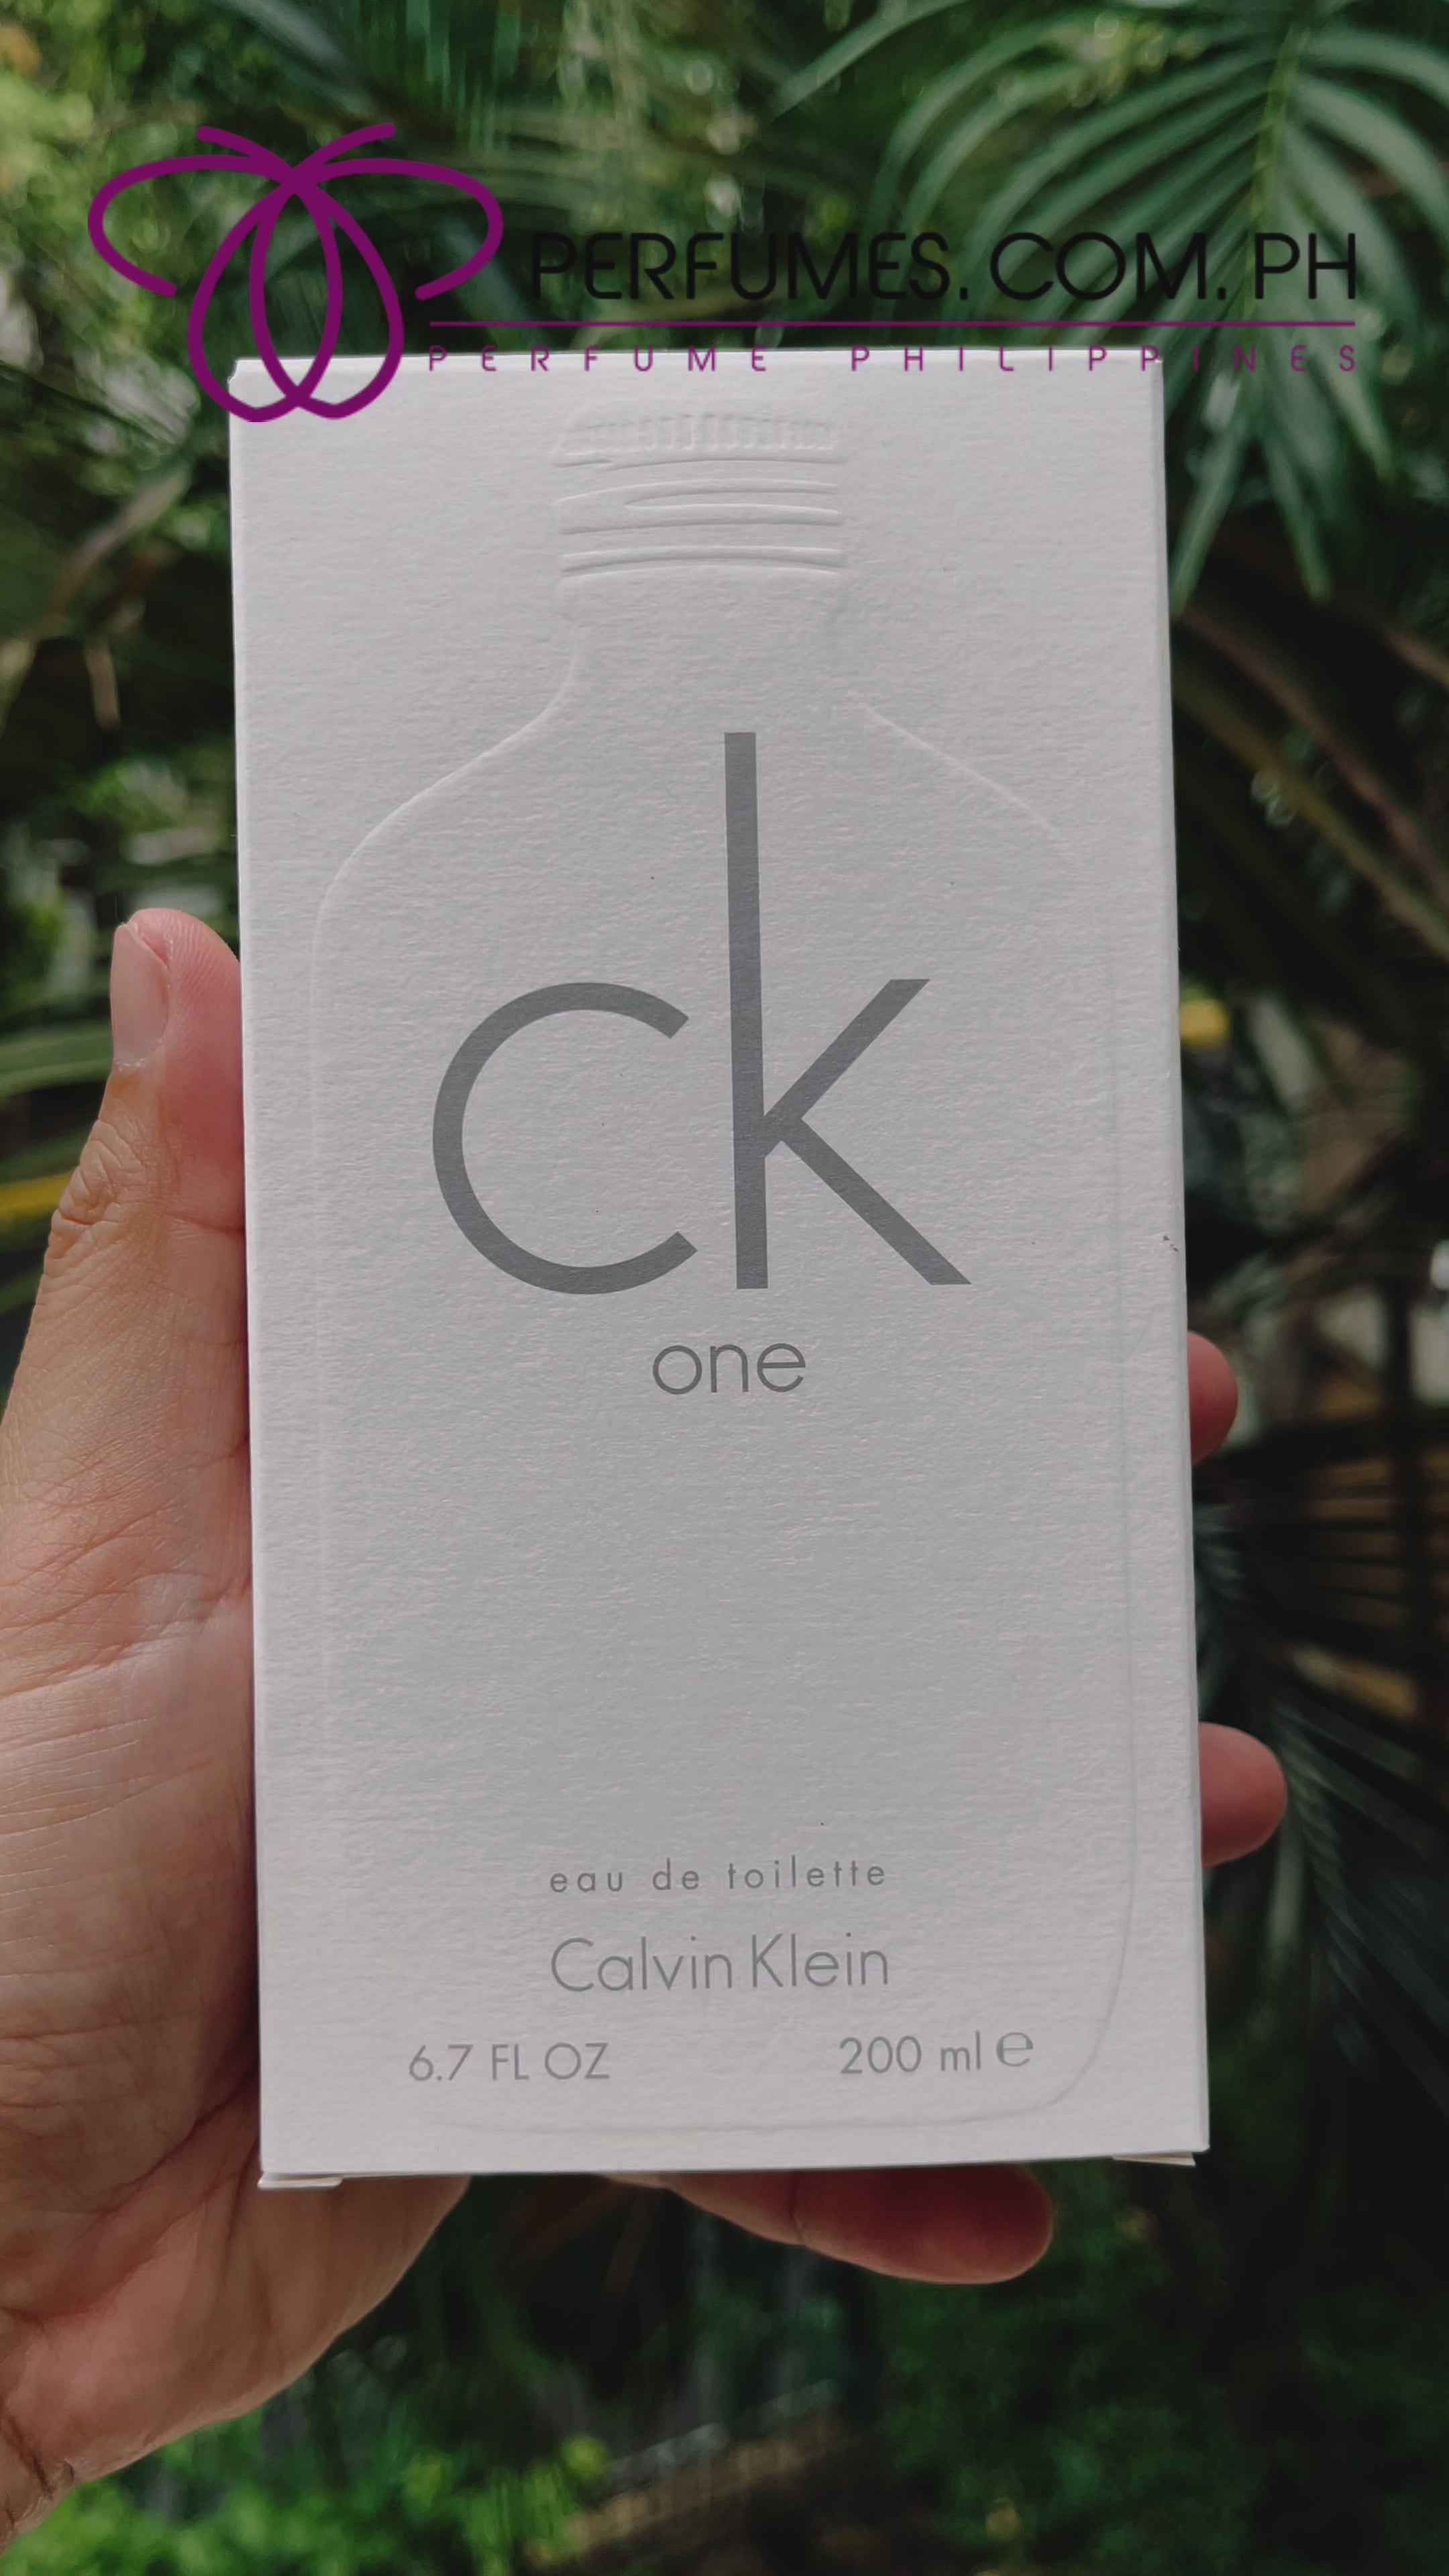 Calvin Klein CK One 200ml Actual Video - Perfume Philippines